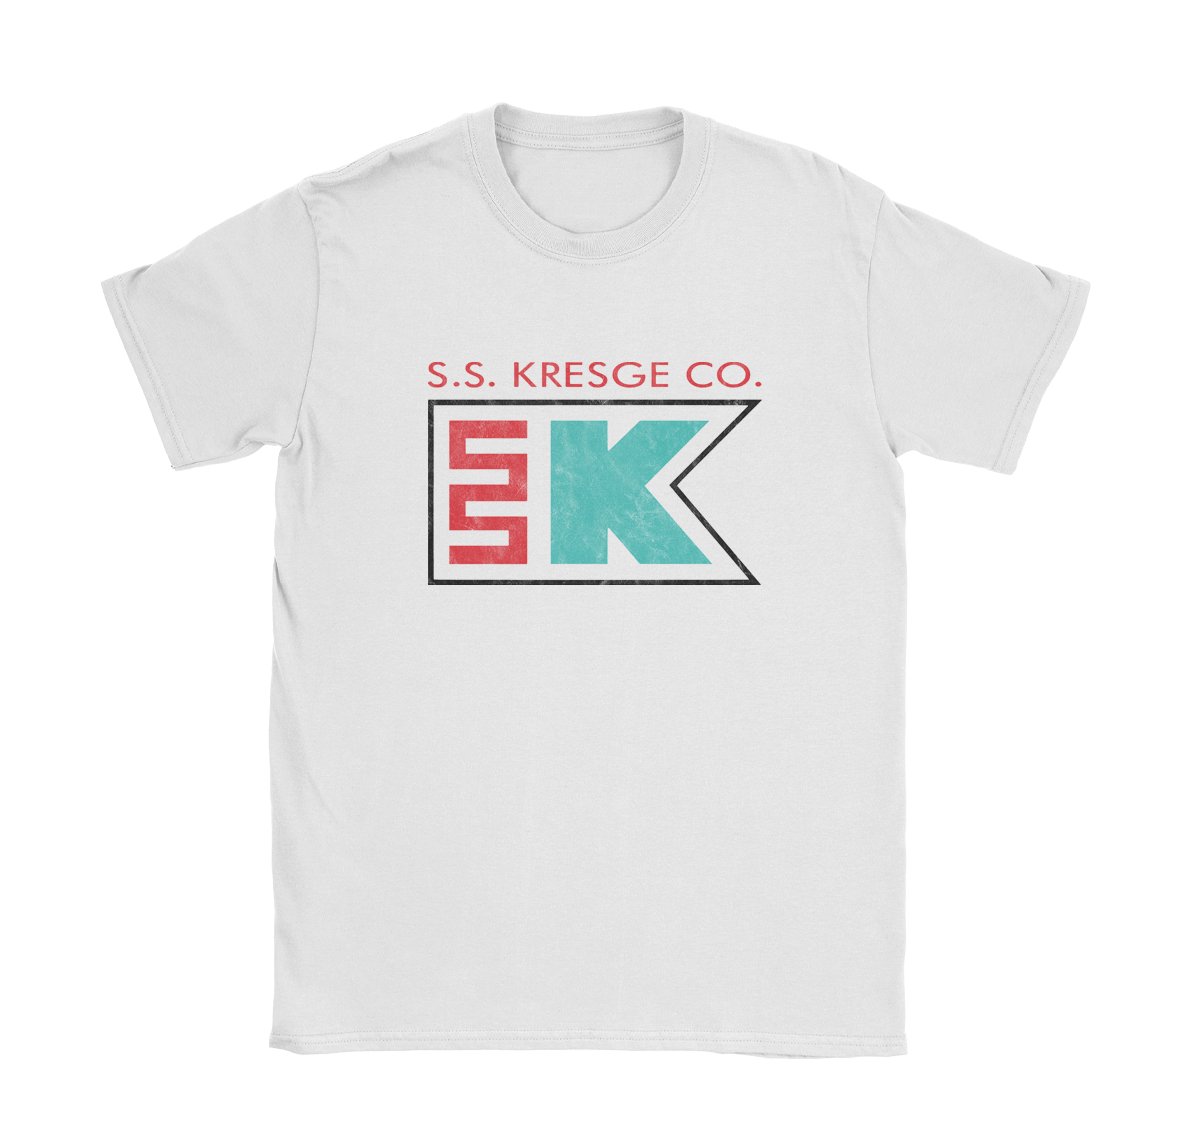 S.S. Kresge Co. - Black Cat MFG - T-Shirt